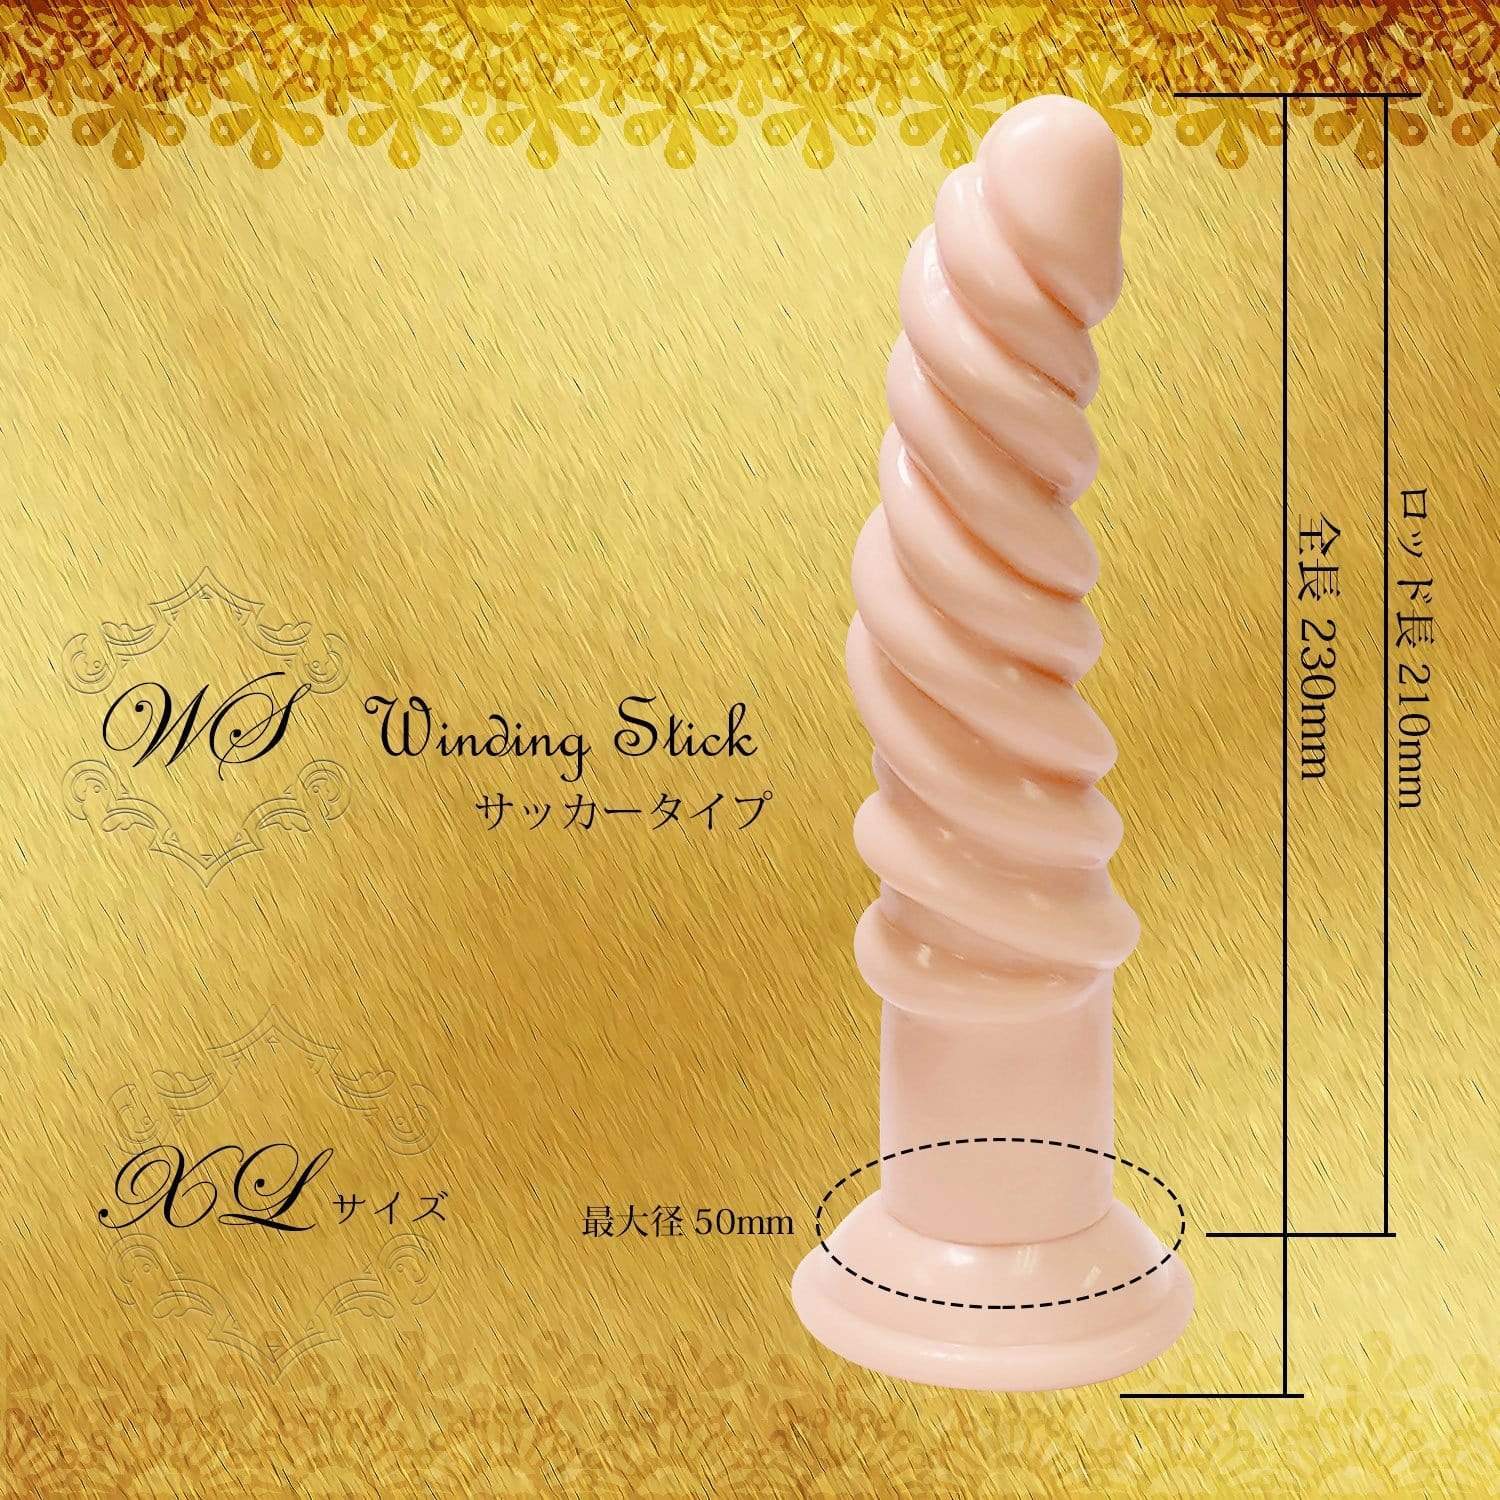 Magic Eyes - Winding Stick Sucker XL Dildo (Beige) Non Realistic Dildo w/o suction cup (Non Vibration) 4571324241814 CherryAffairs